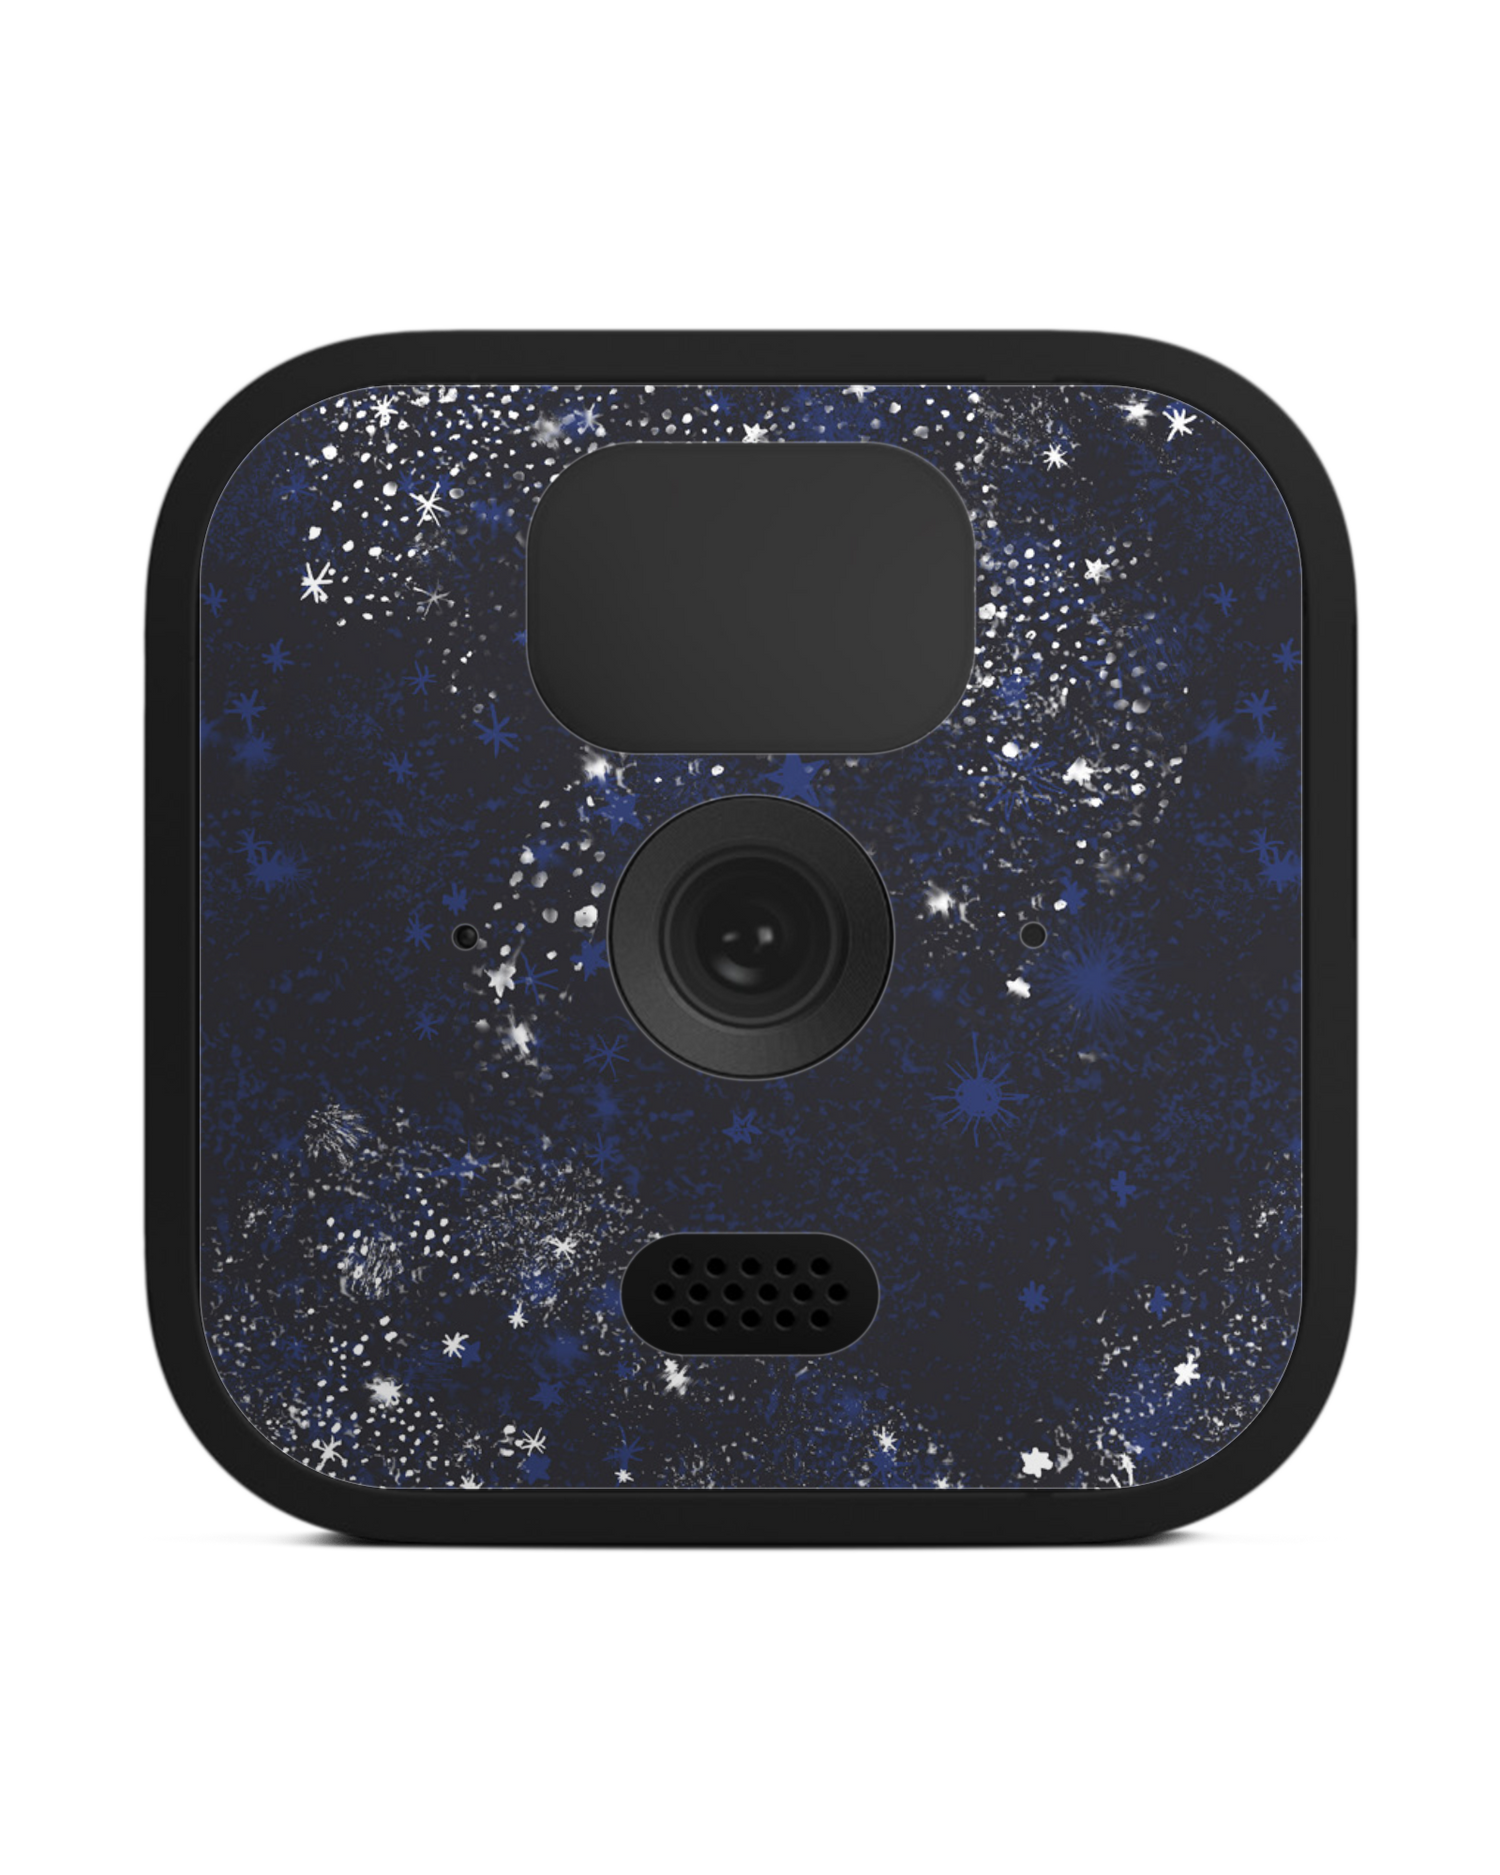 Starry Night Sky Kamera Aufkleber Blink Outdoor (2020): Vorderansicht